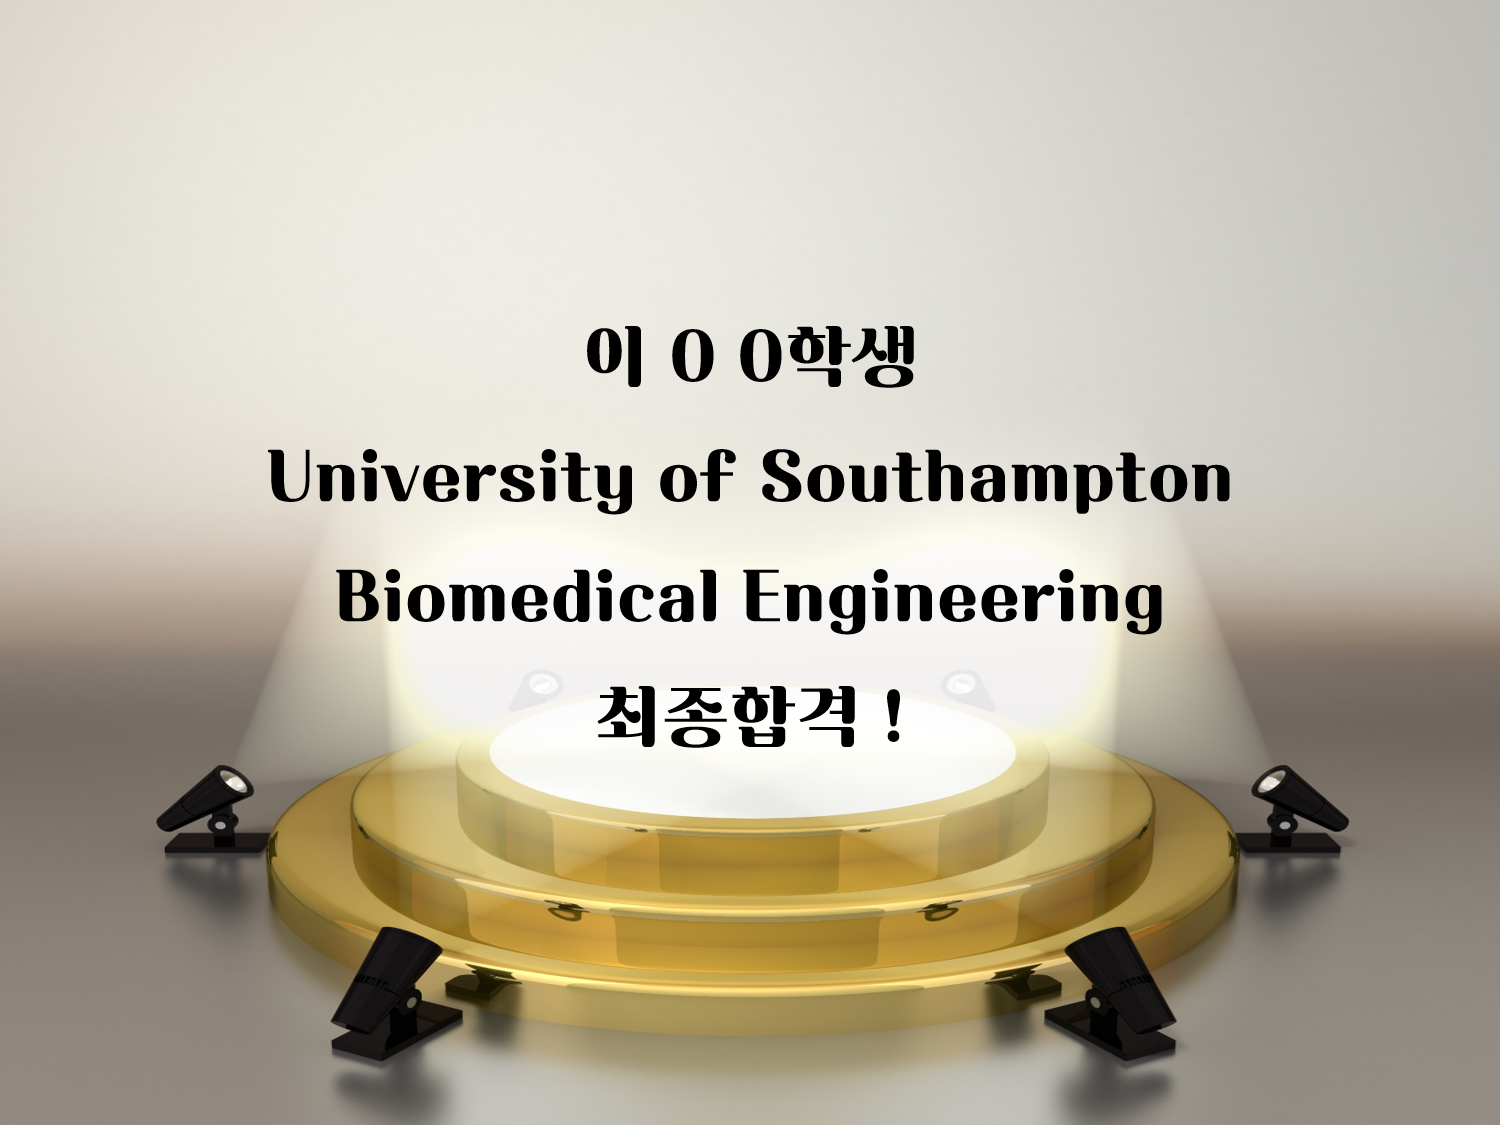 University of Southampton: Biomedical Engineering